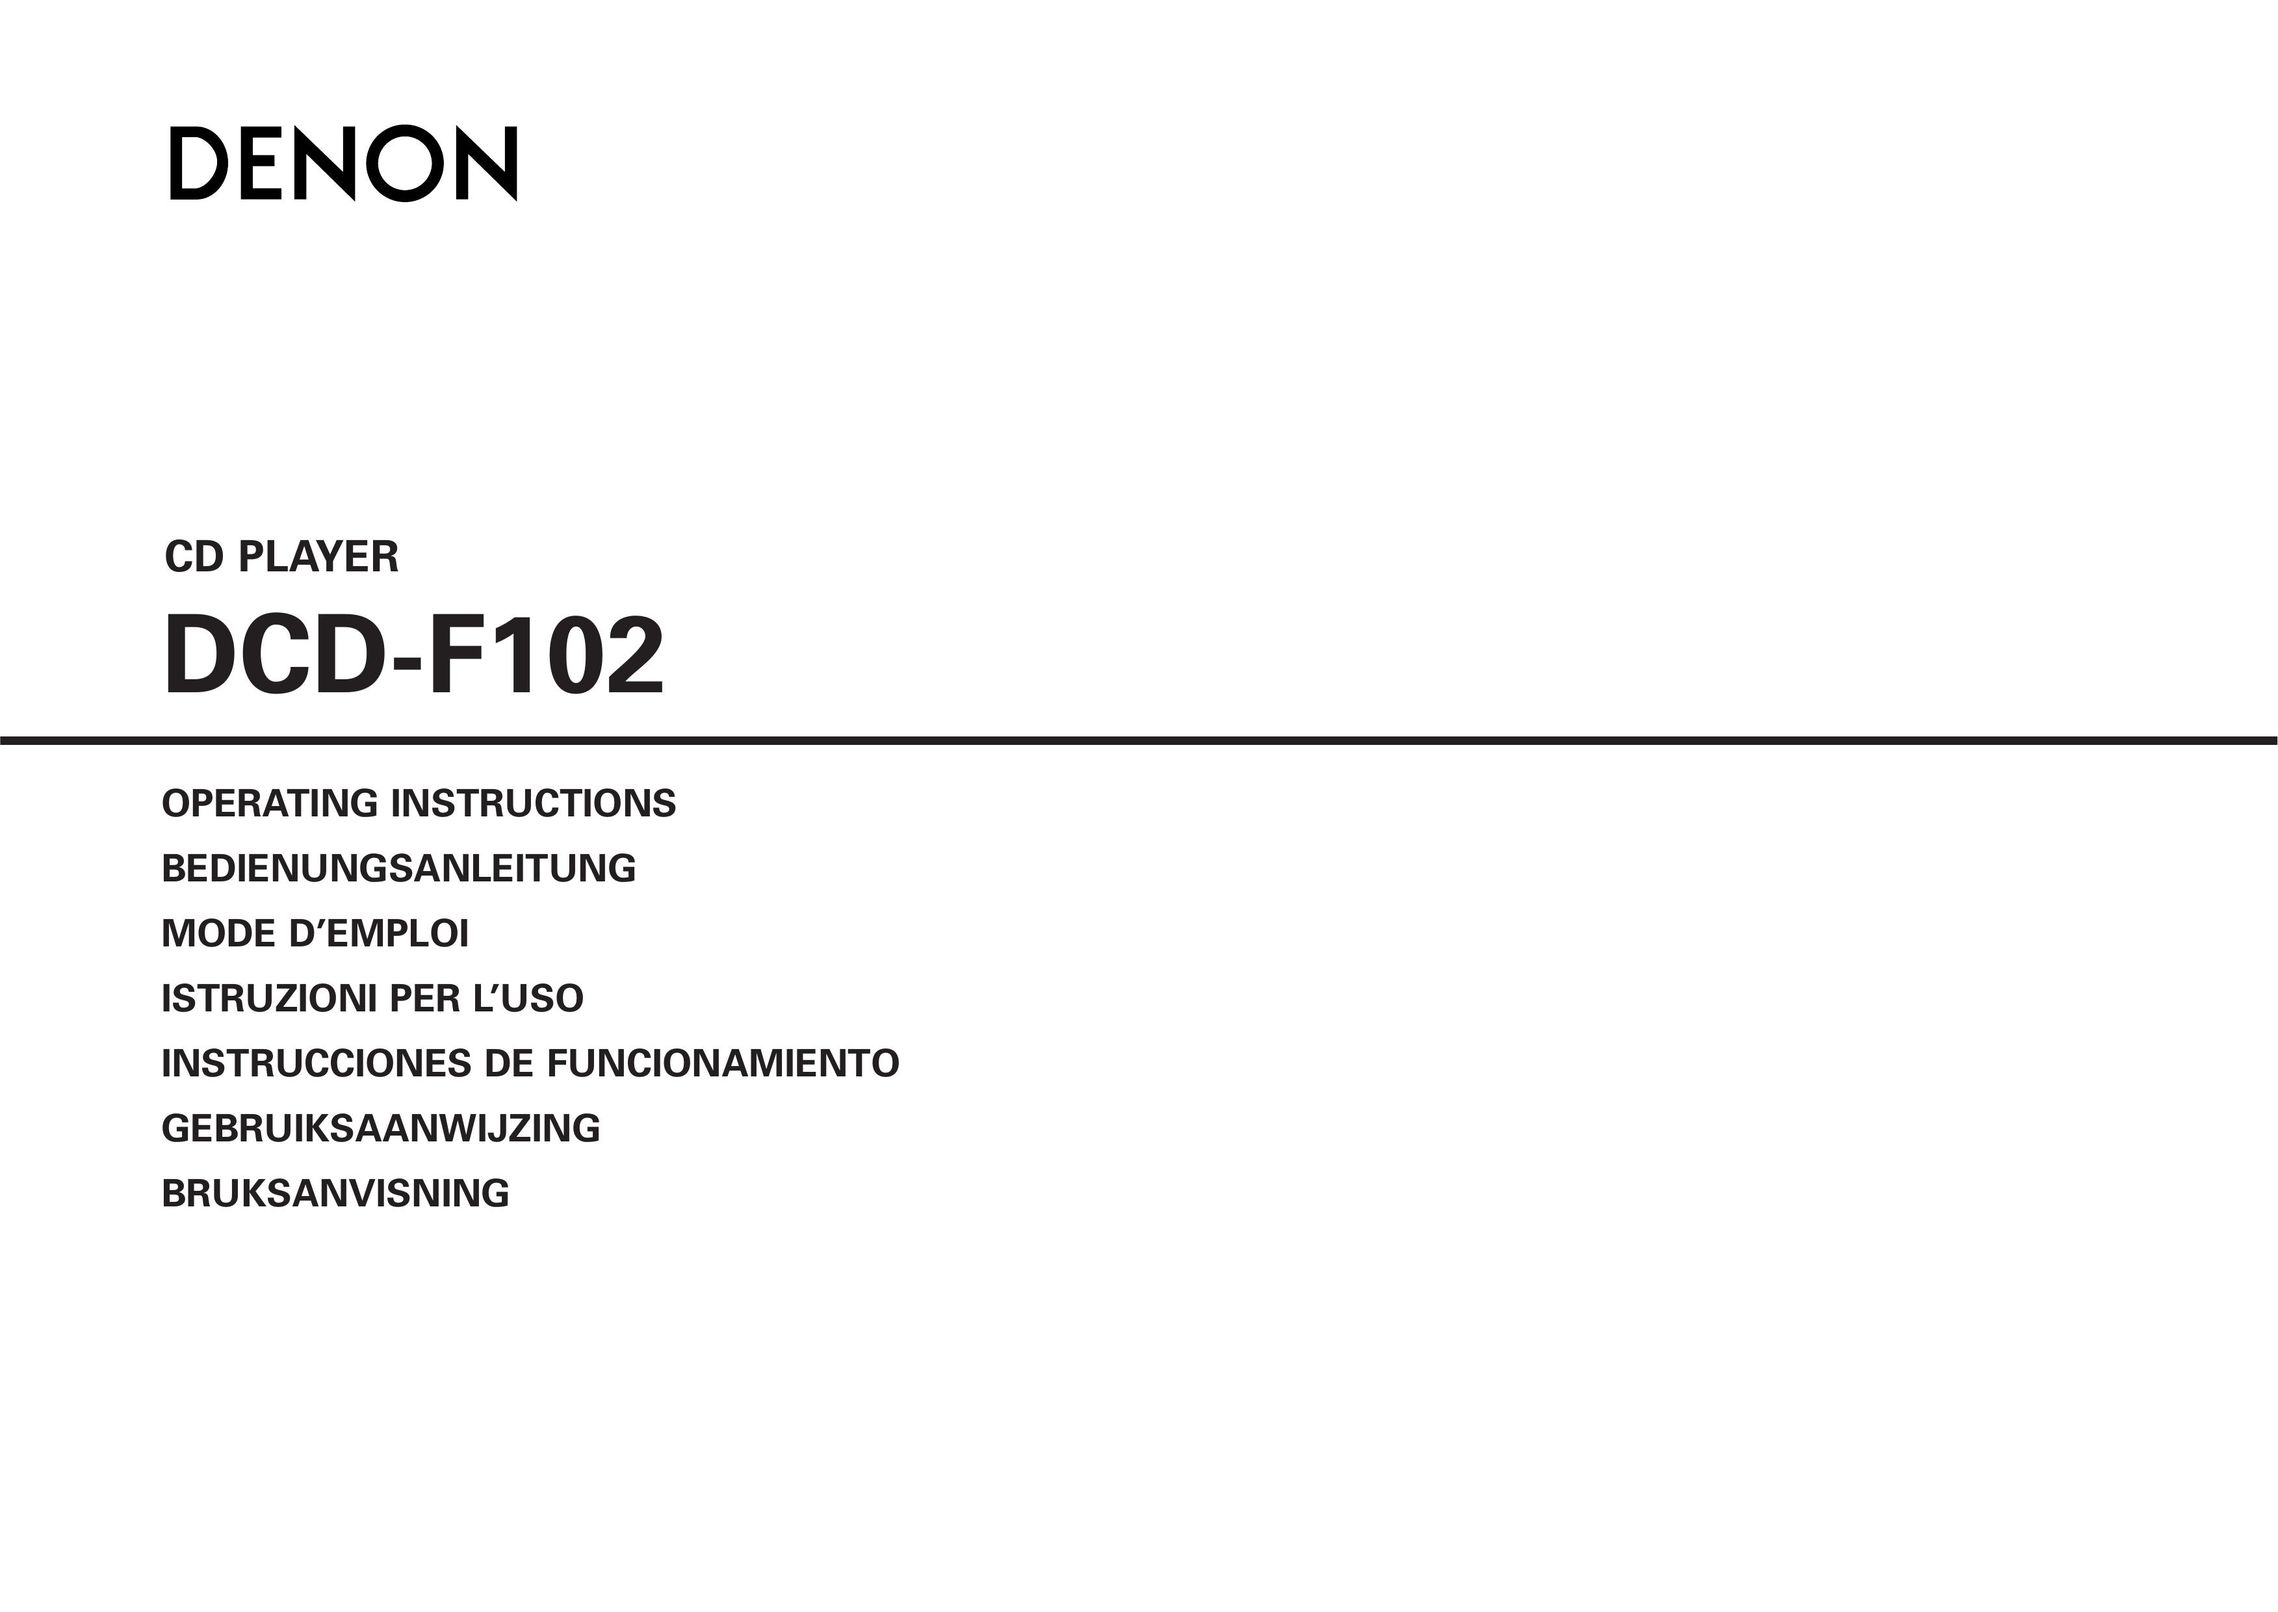 Denon DCD-F102 CD Player User Manual